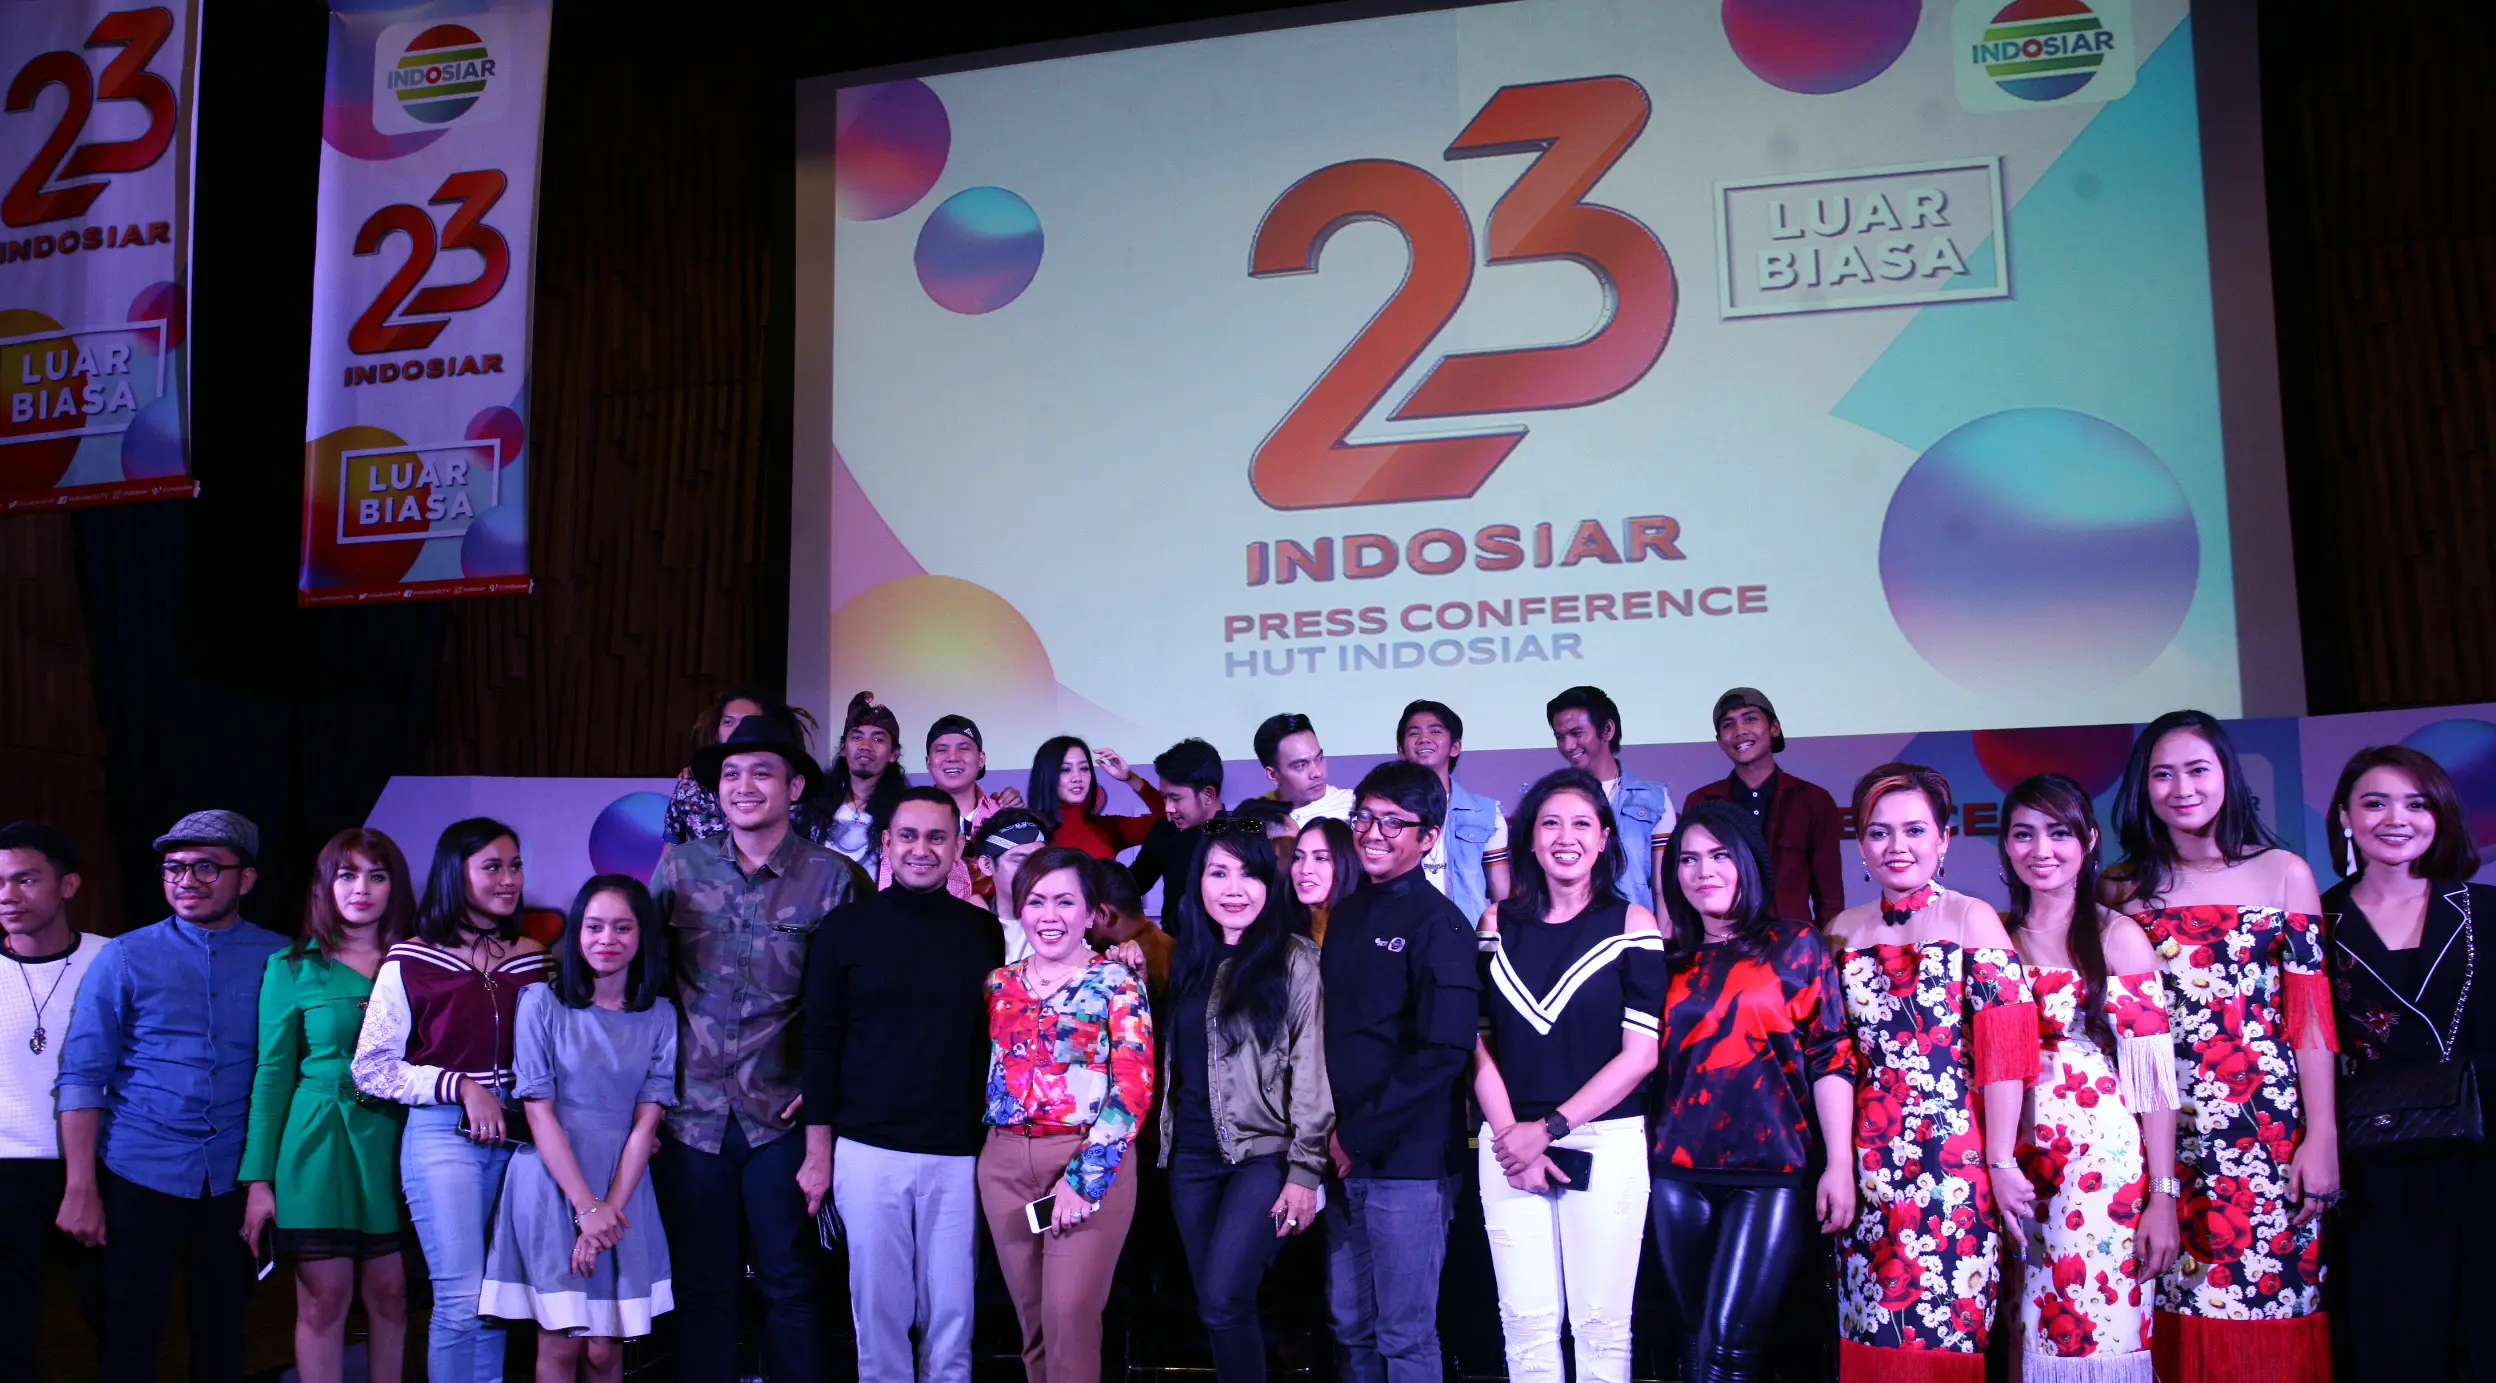 Konser HUT Indosiar ke-23 dipastikan meriah (Nurwahyunan/Bintang.com)